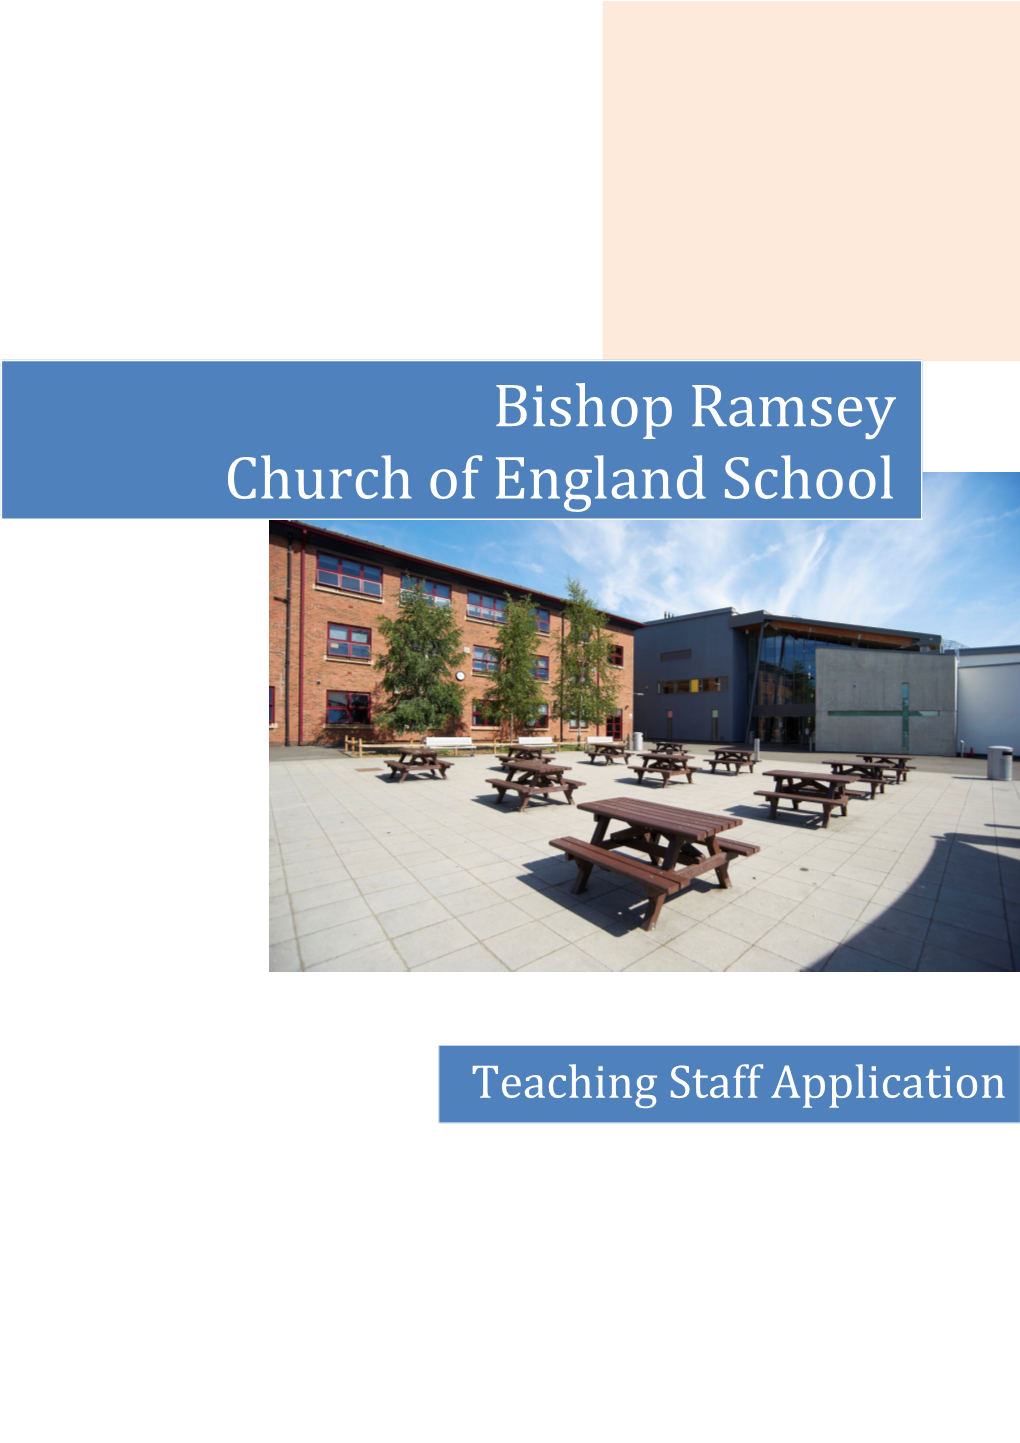 Bishop Ramsey Church of England School